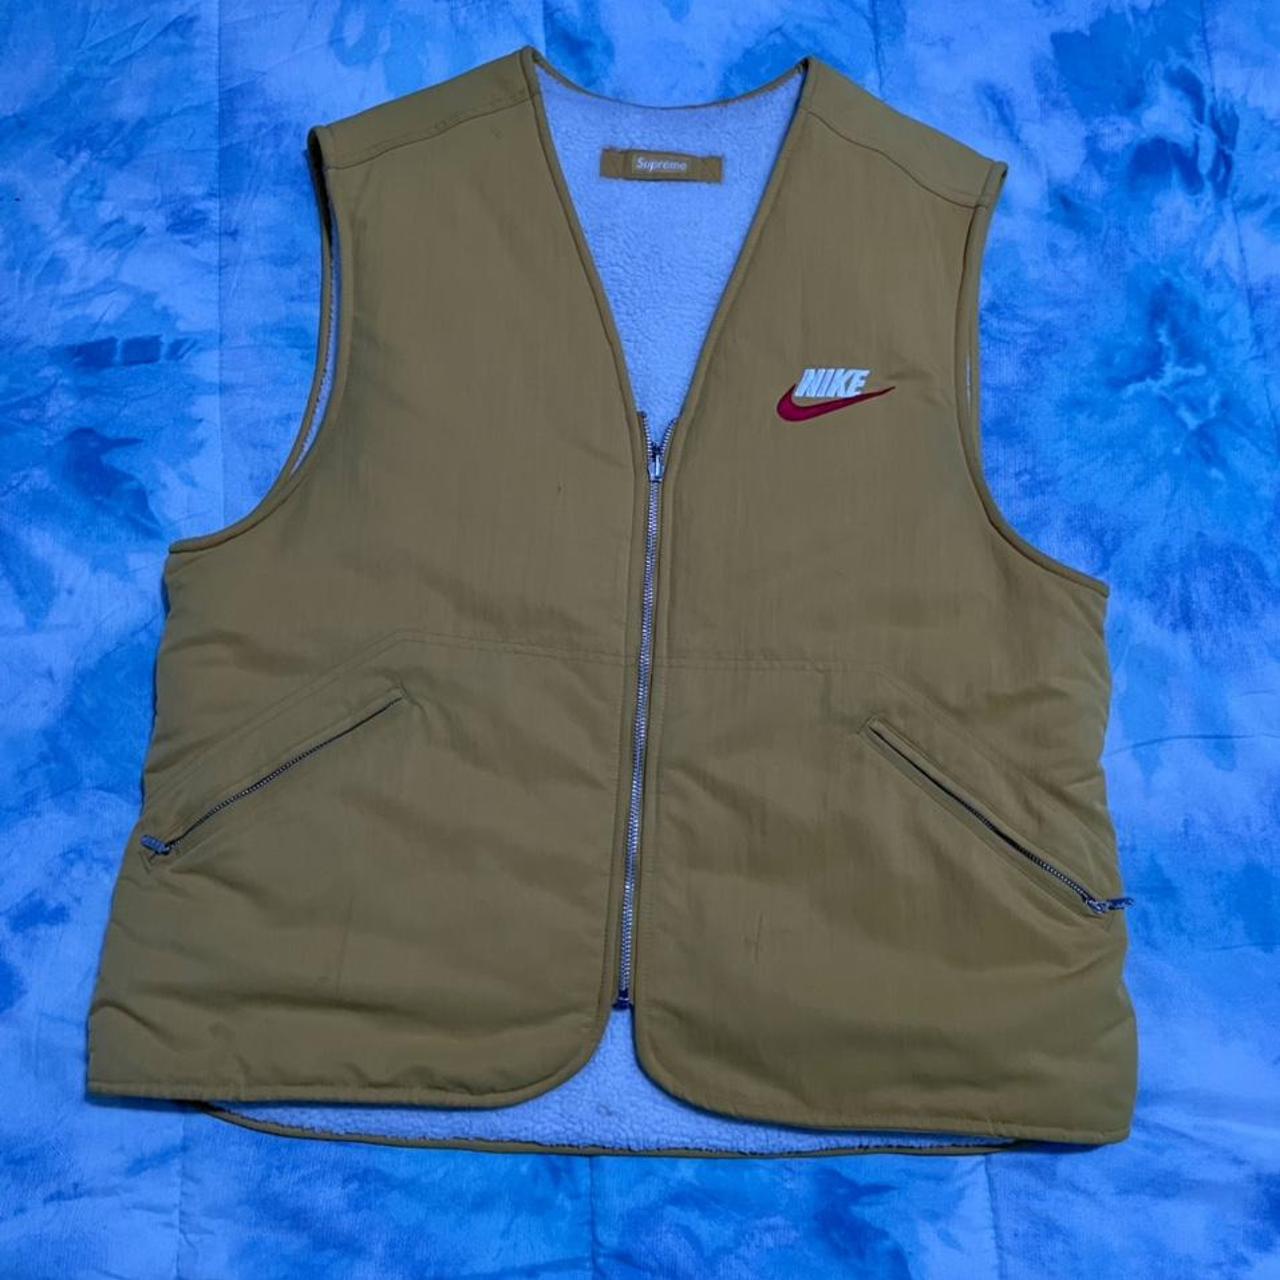 Supreme x Nike vest used - Depop